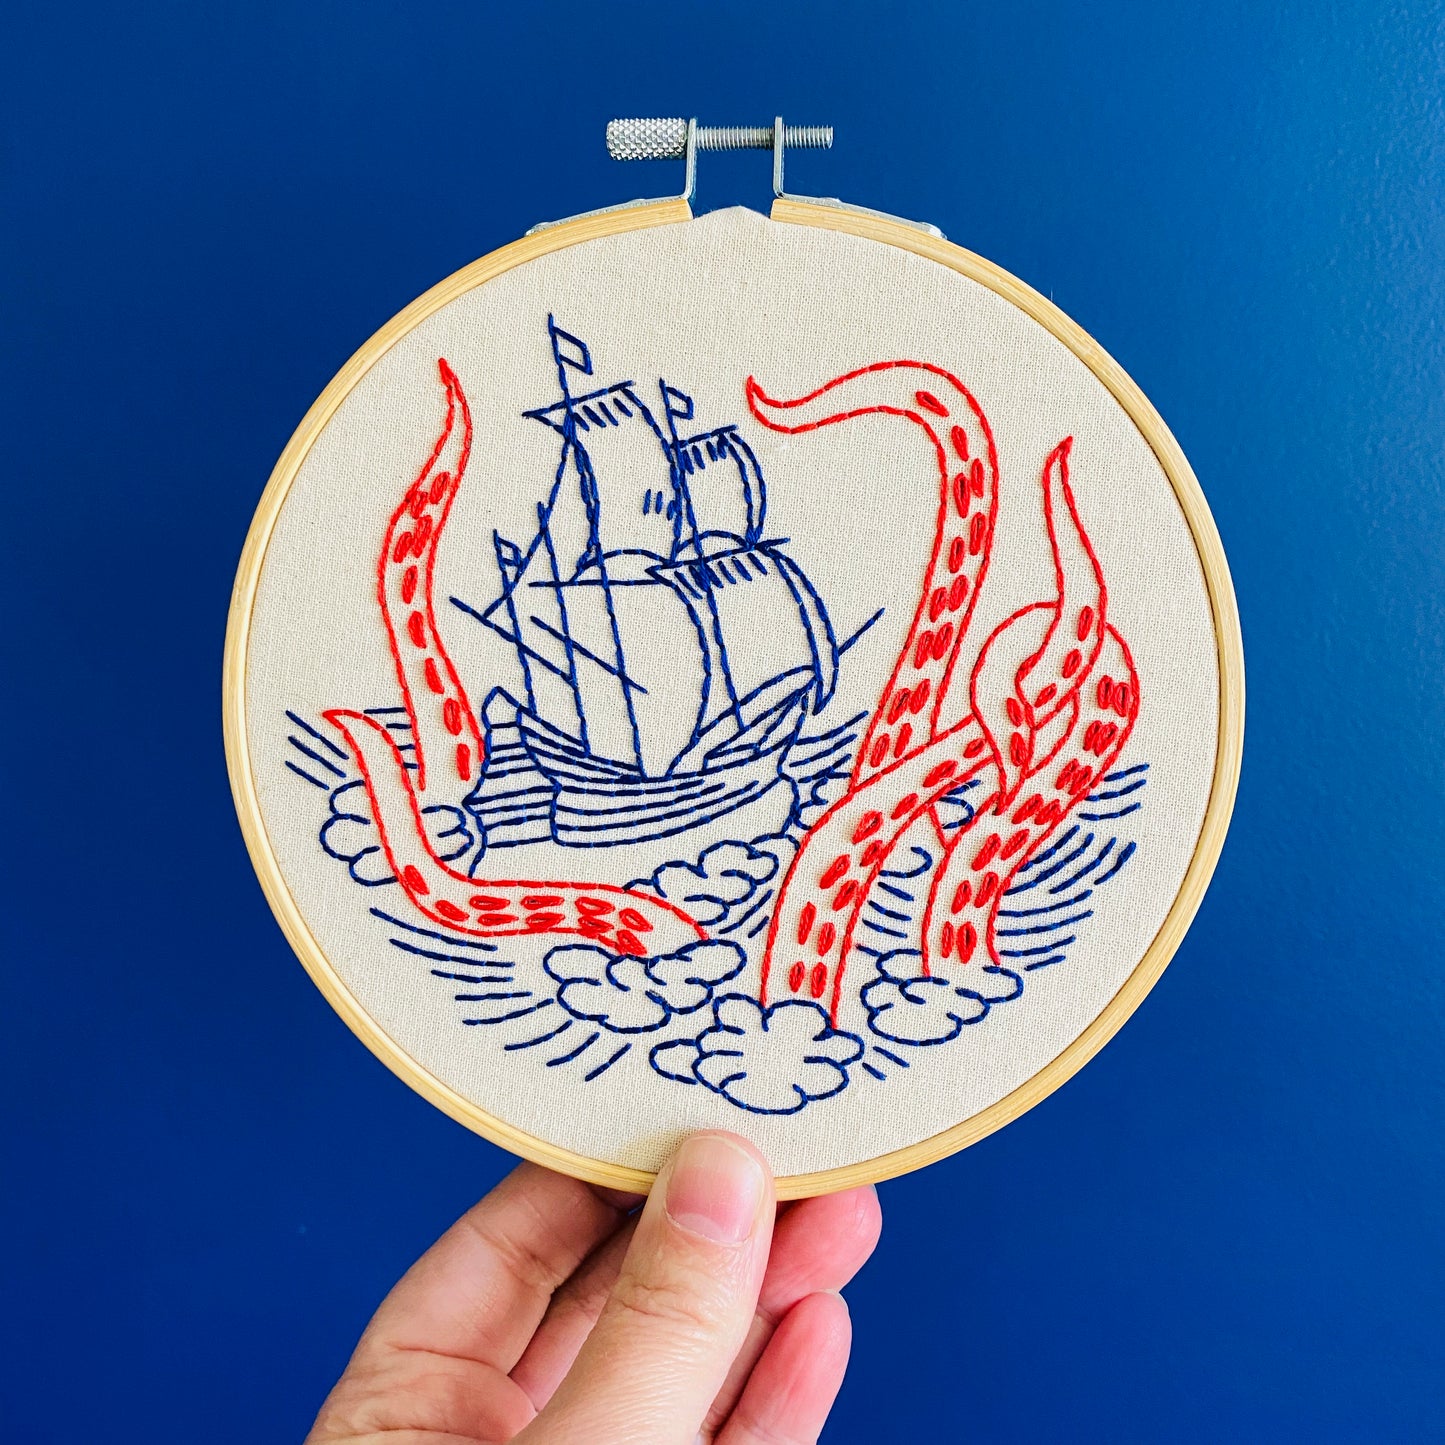 DIY Embroidery Kits